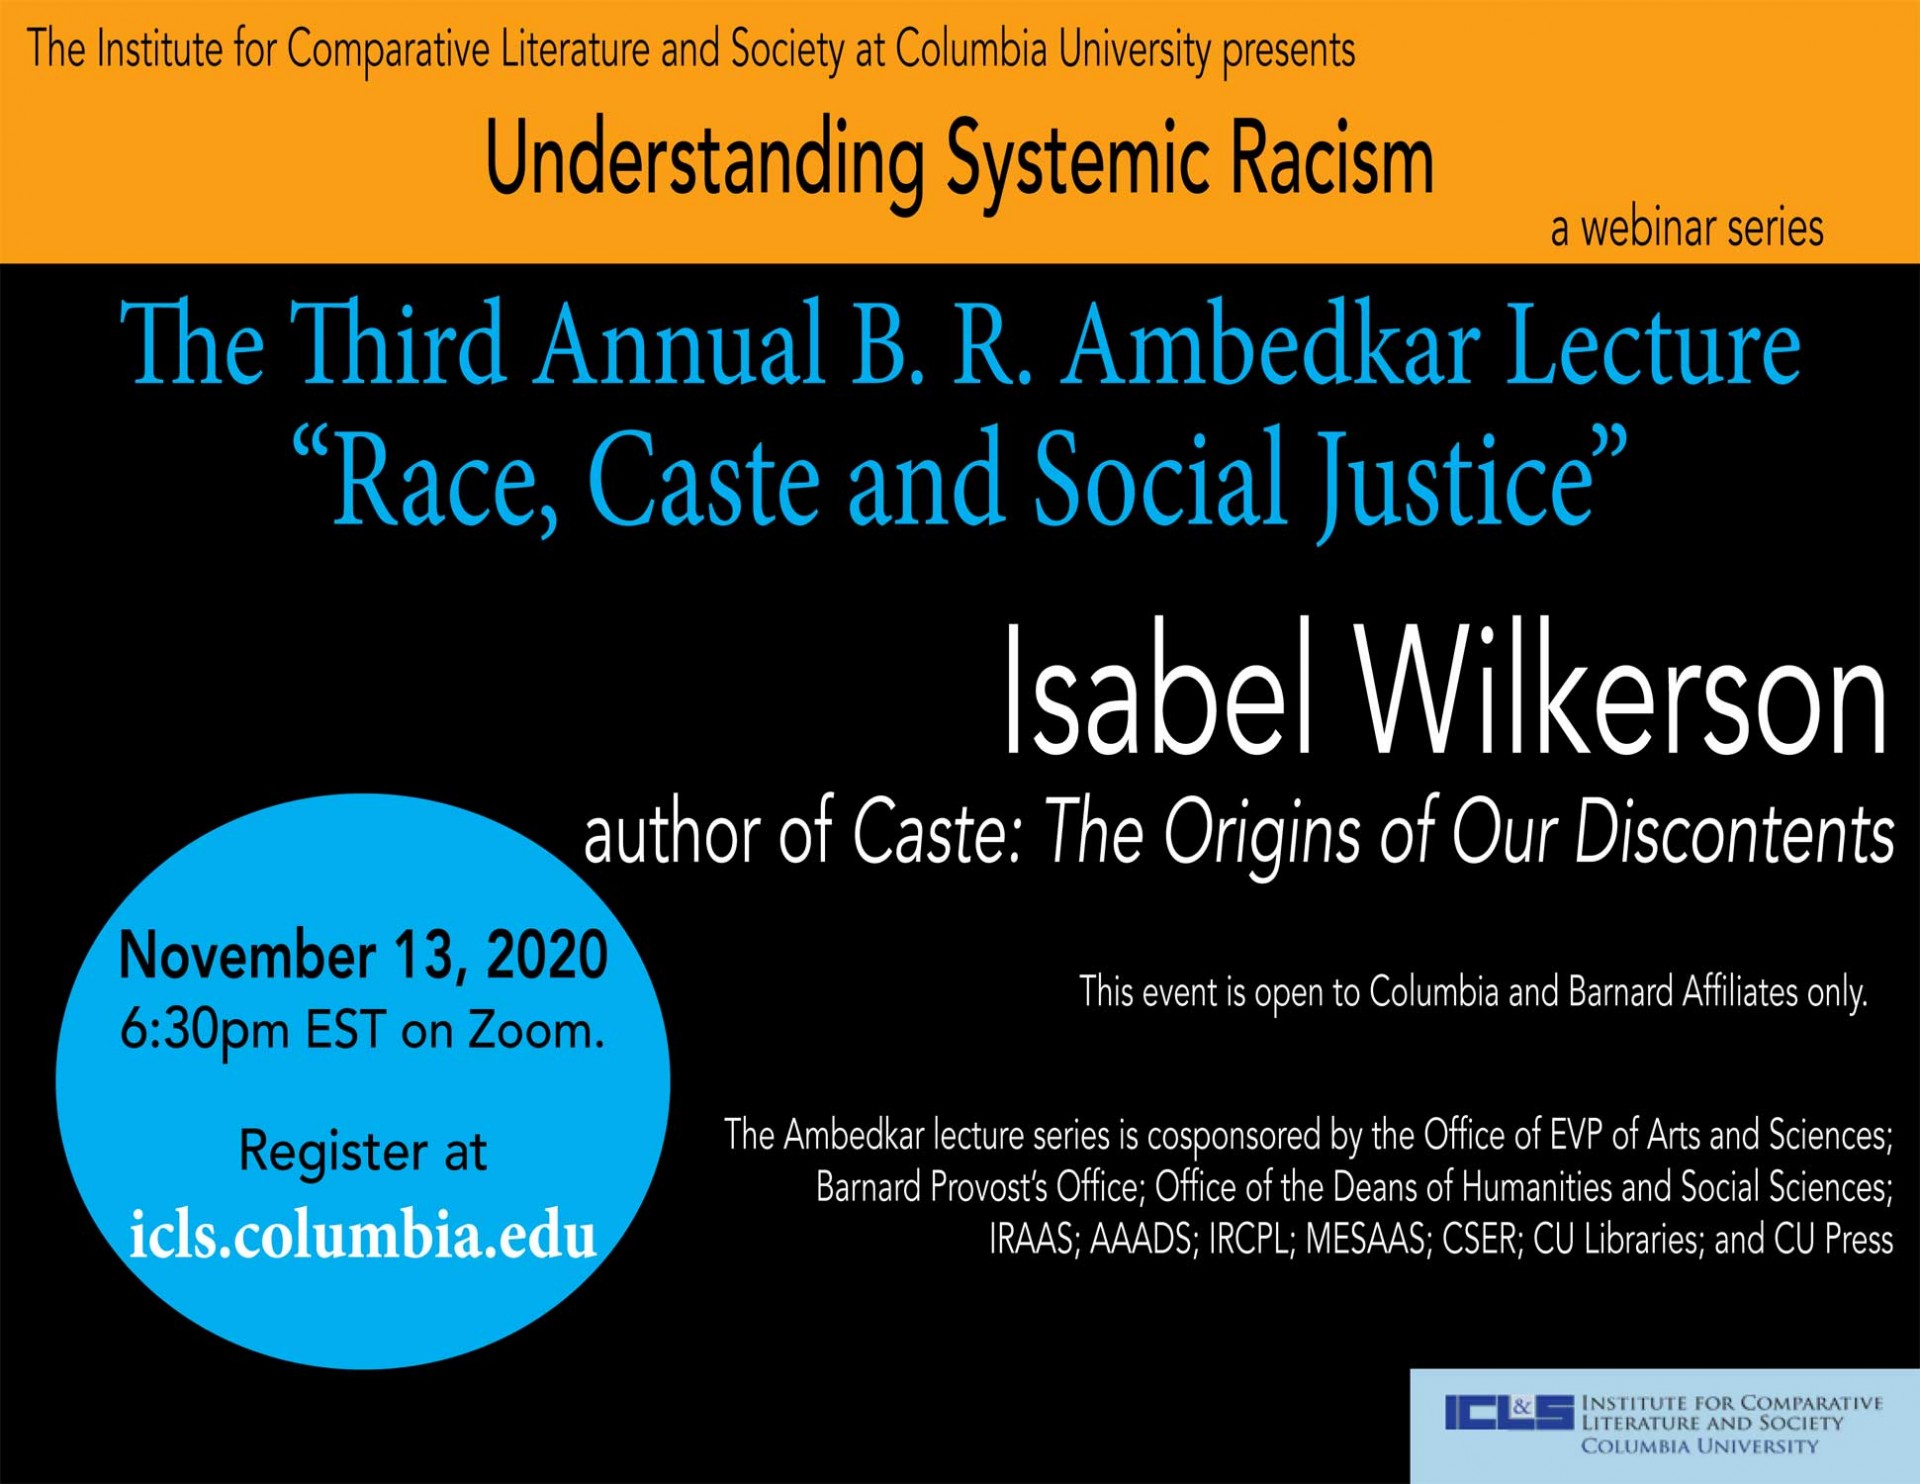 Image Understanding Systemic Racism flyer